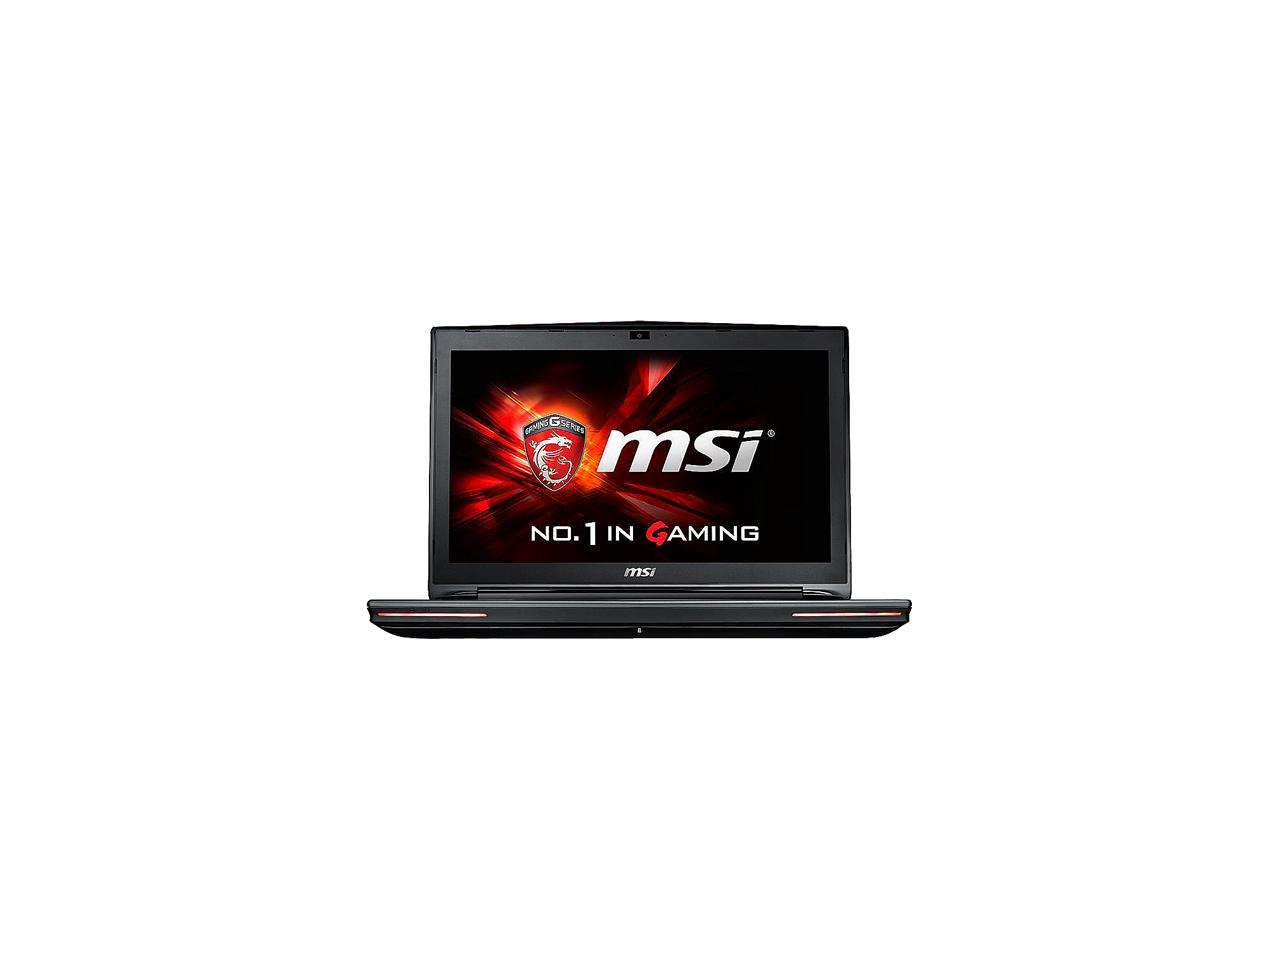 MSI GT Series GT72 Dominator Pro G-034 Gaming Laptop 6th Generation